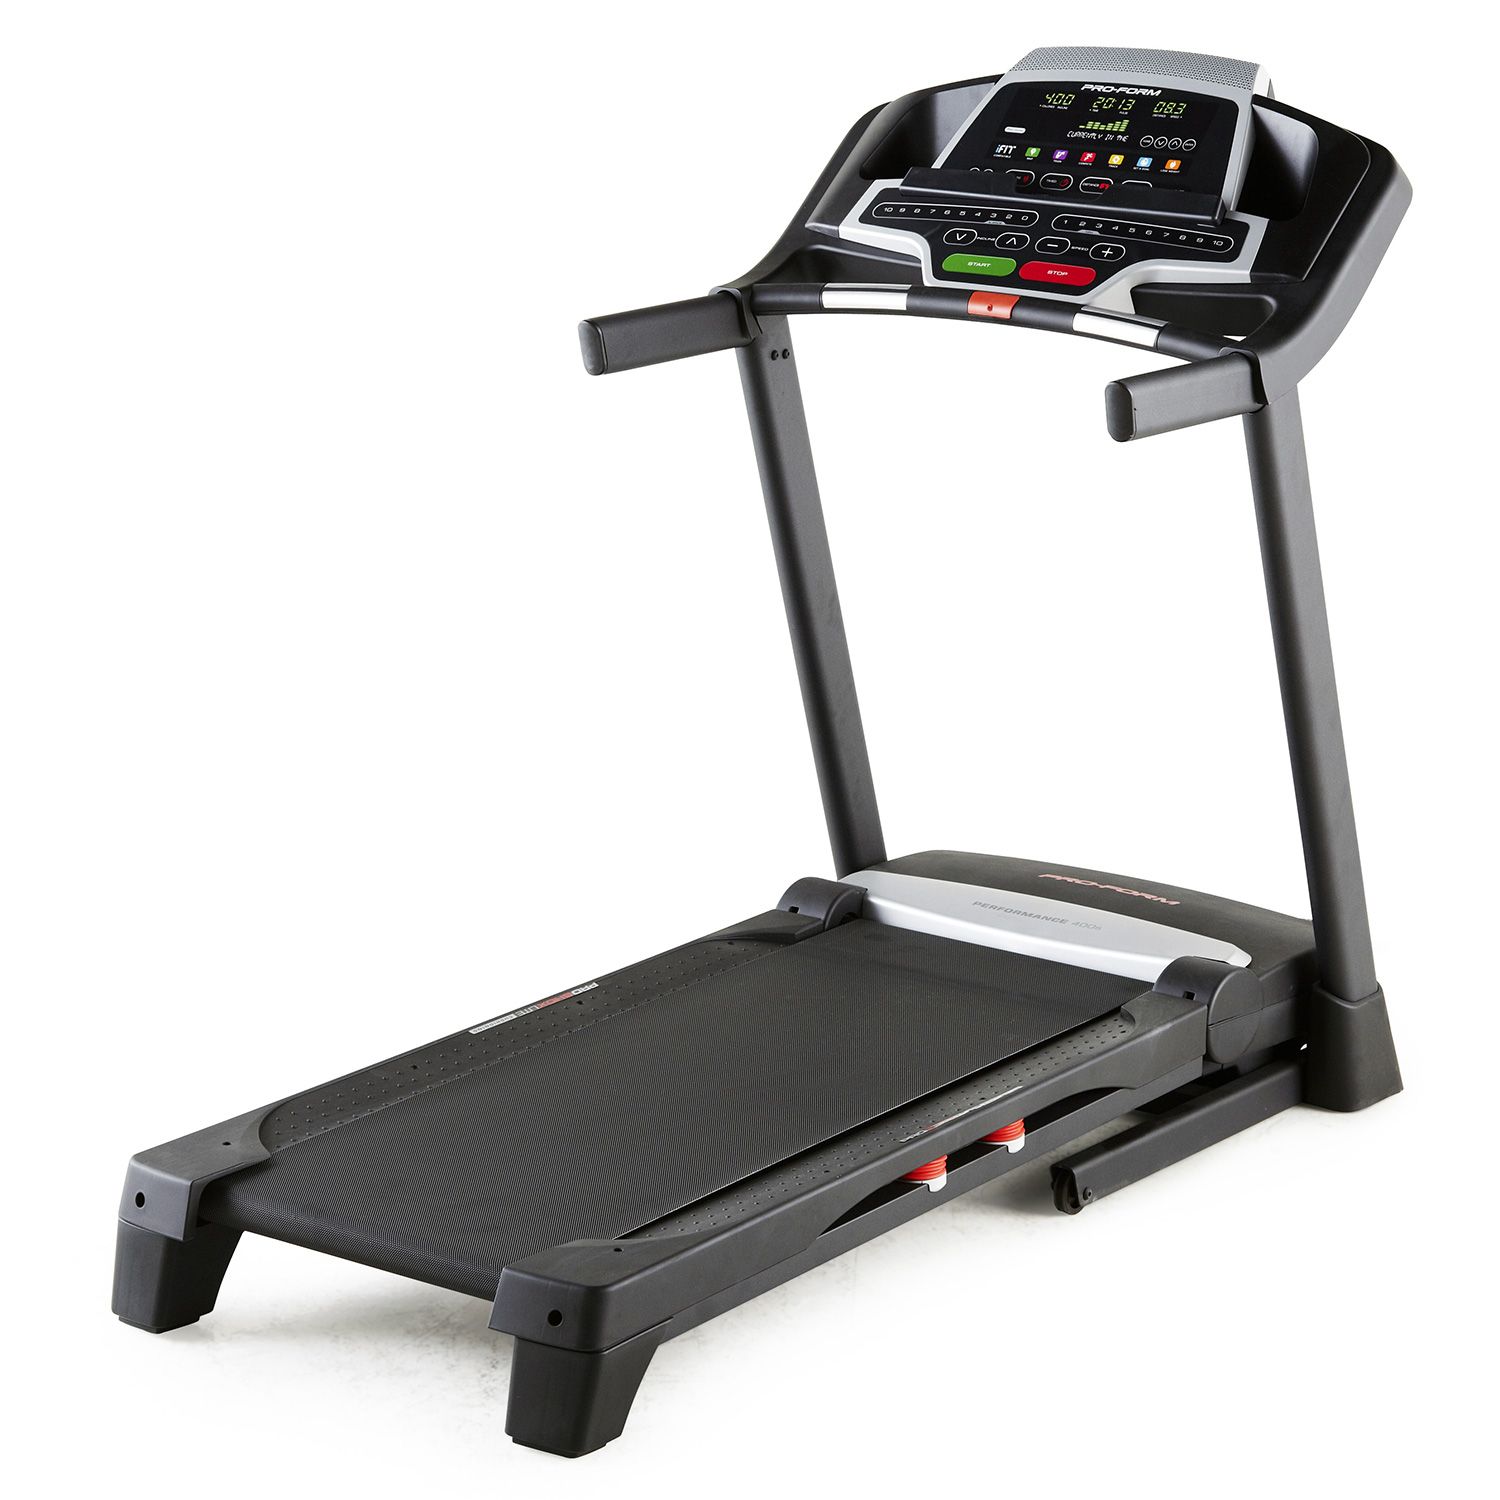 585 Proform Performance Treadmill Manual